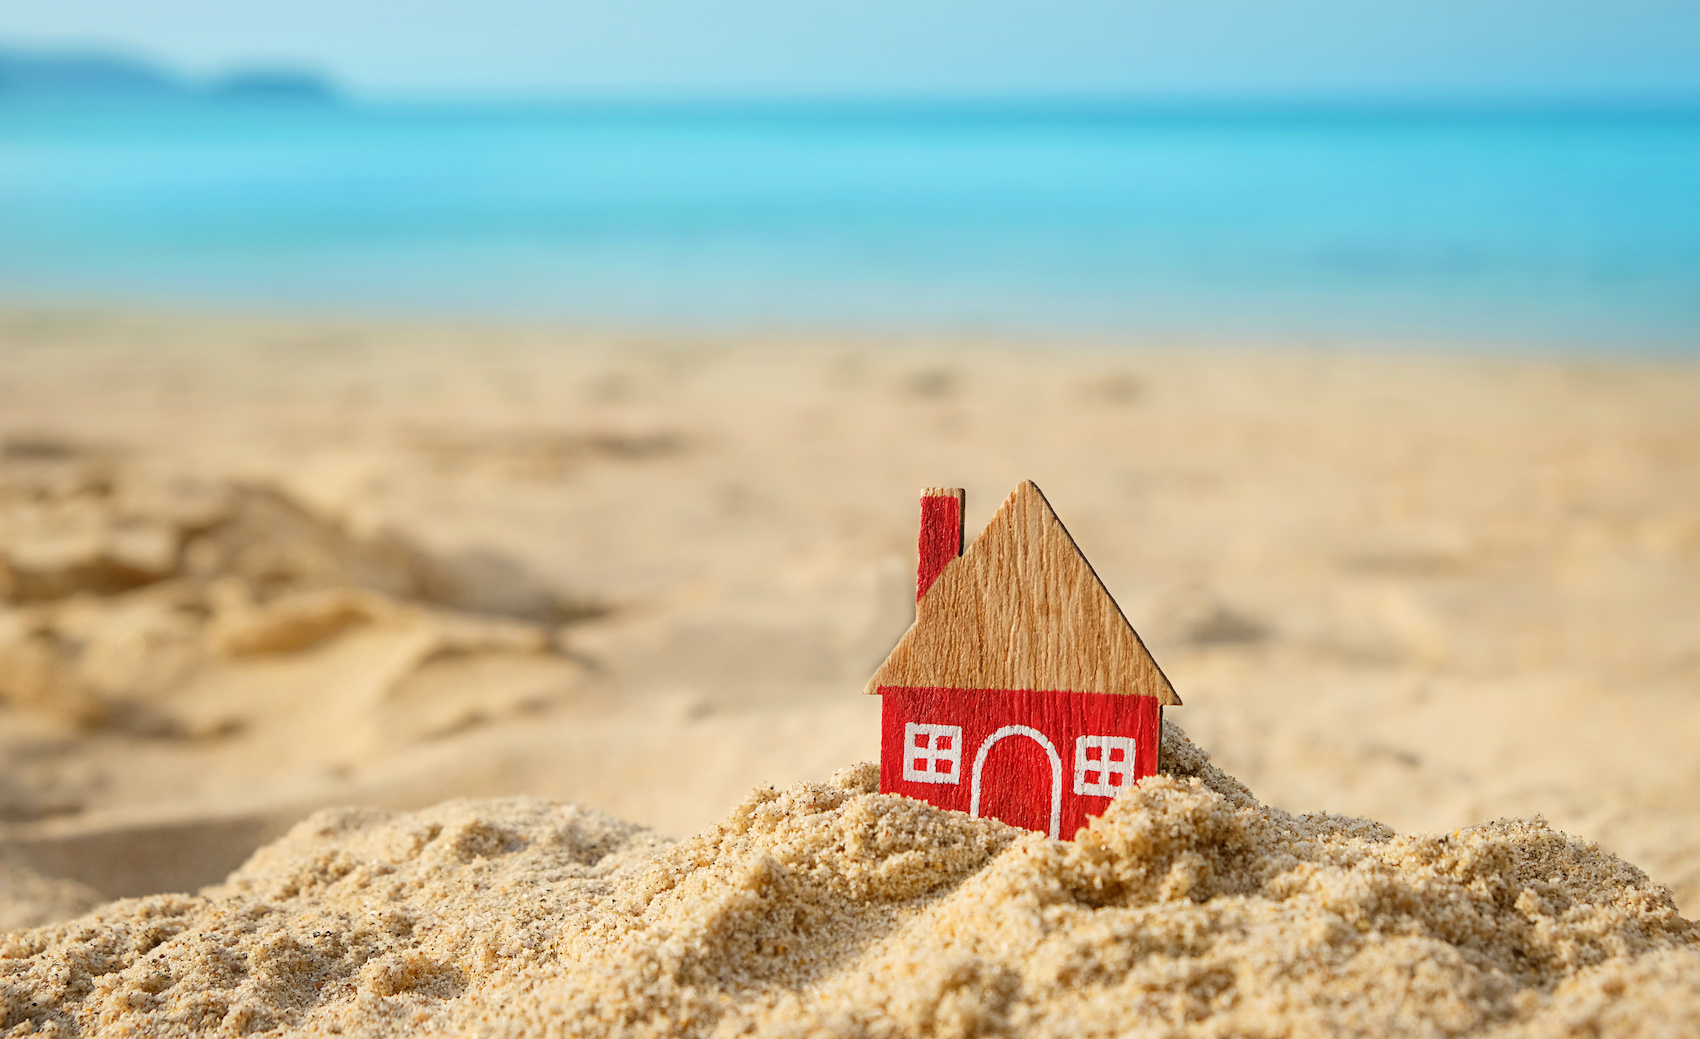 Red miniature house on sand beach